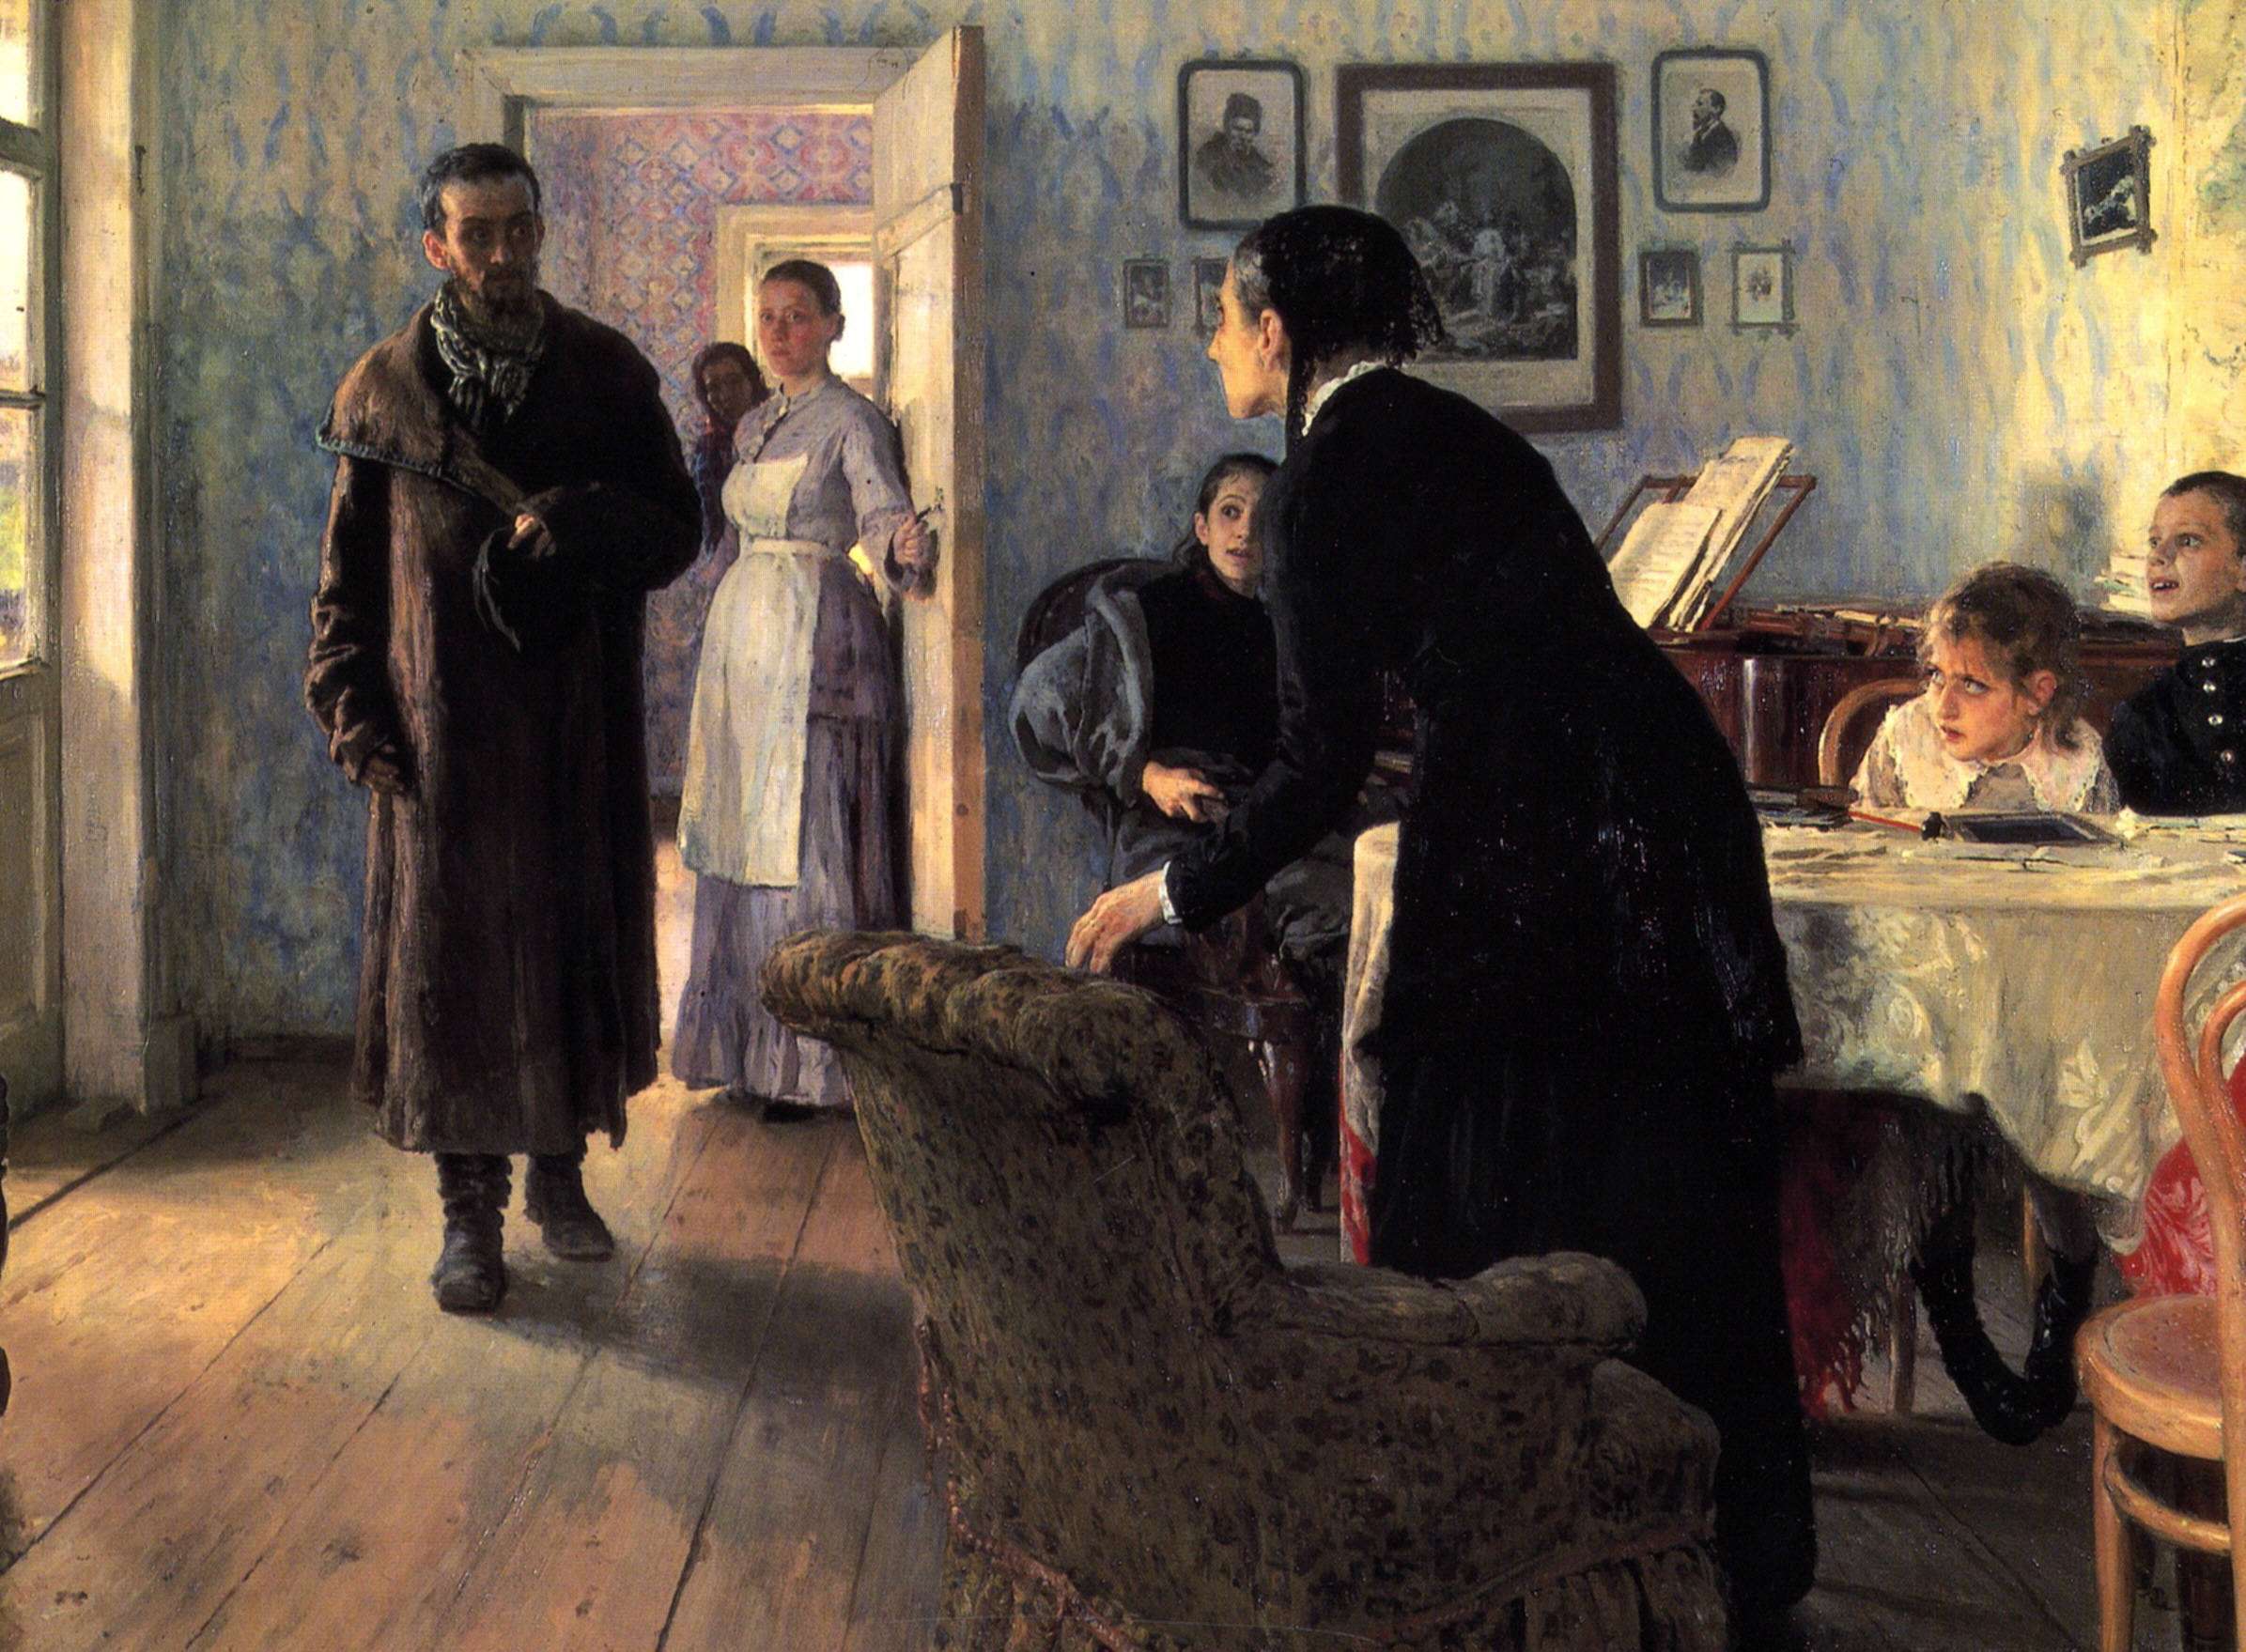 Unexpected Visitors by Ilya Repin - 1884 - 167.5 x 160.5 cm Tretyakov Gallery